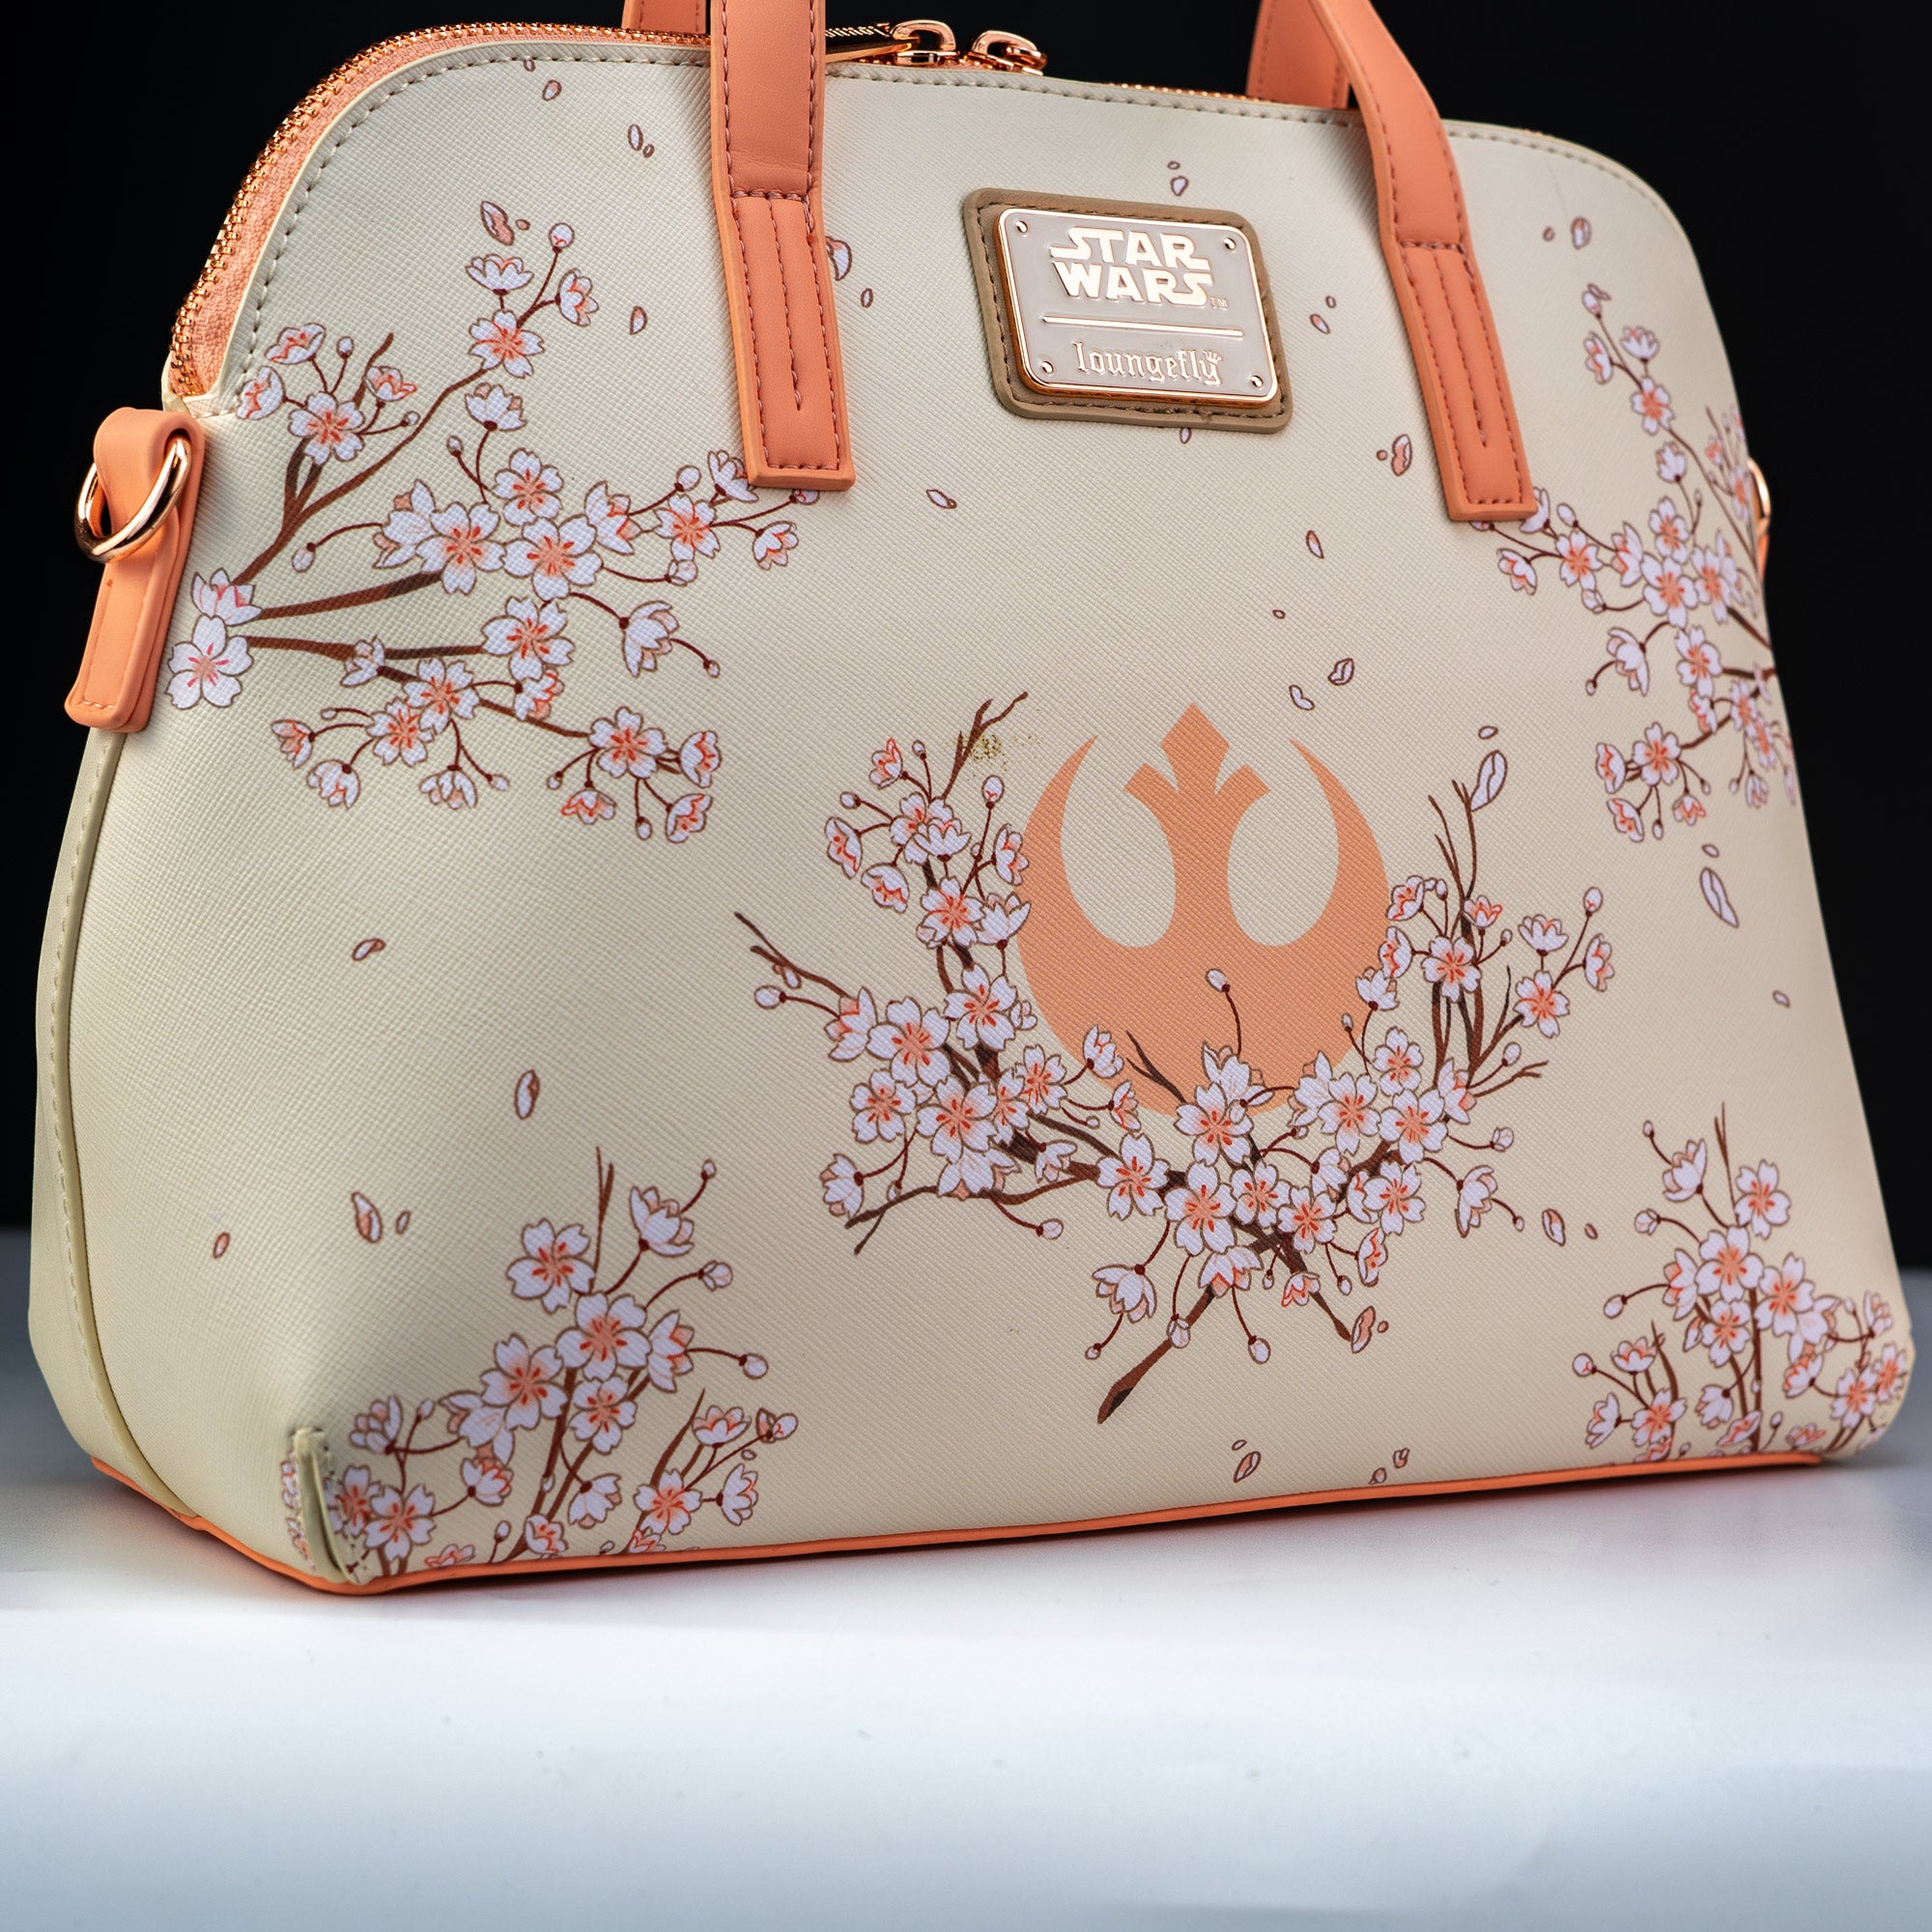 Loungefly x Star Wars Princess Leia Floral Crossbody Bag